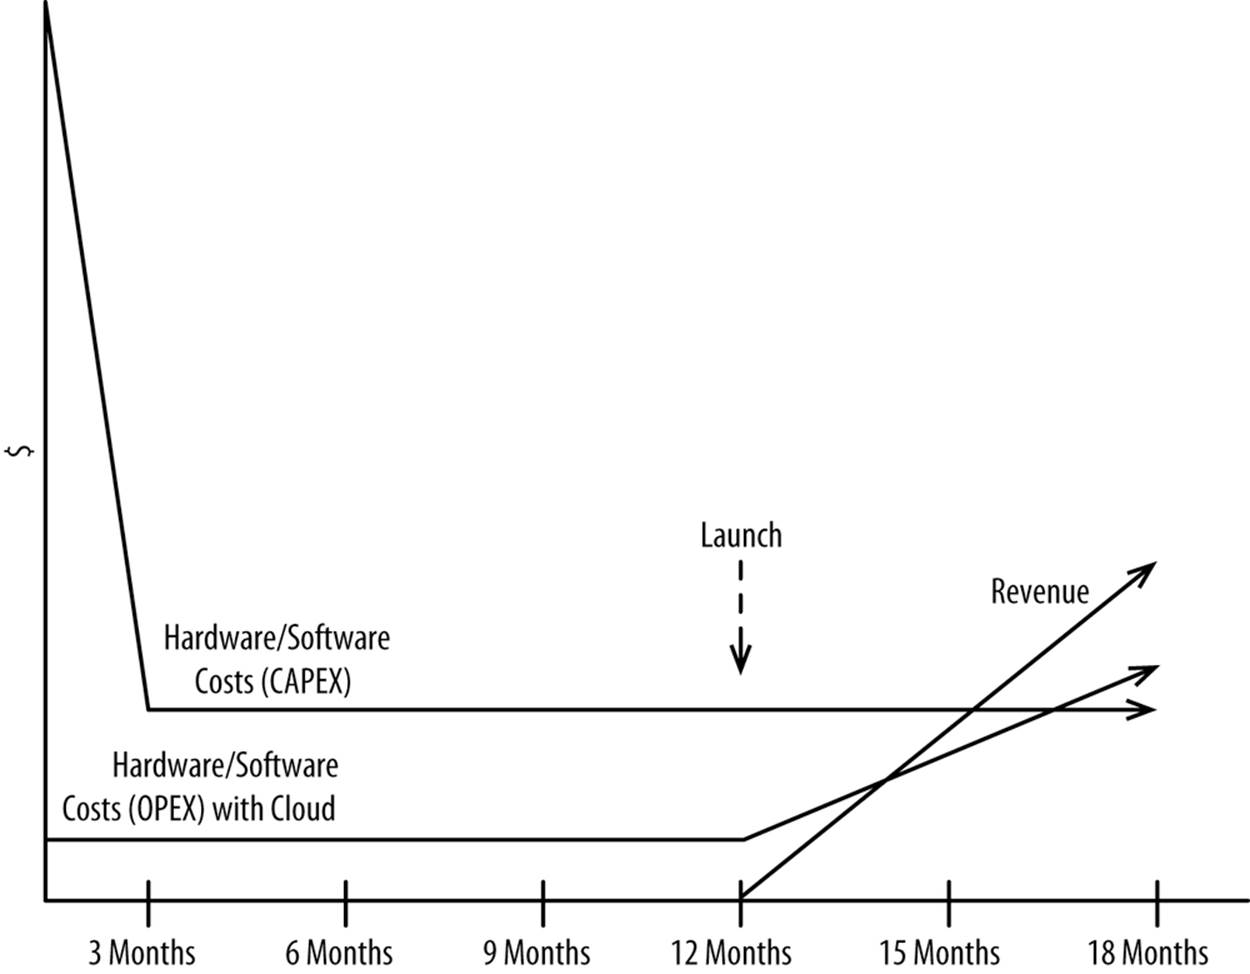 Hardware/software costs—CAPEX versus OPEX